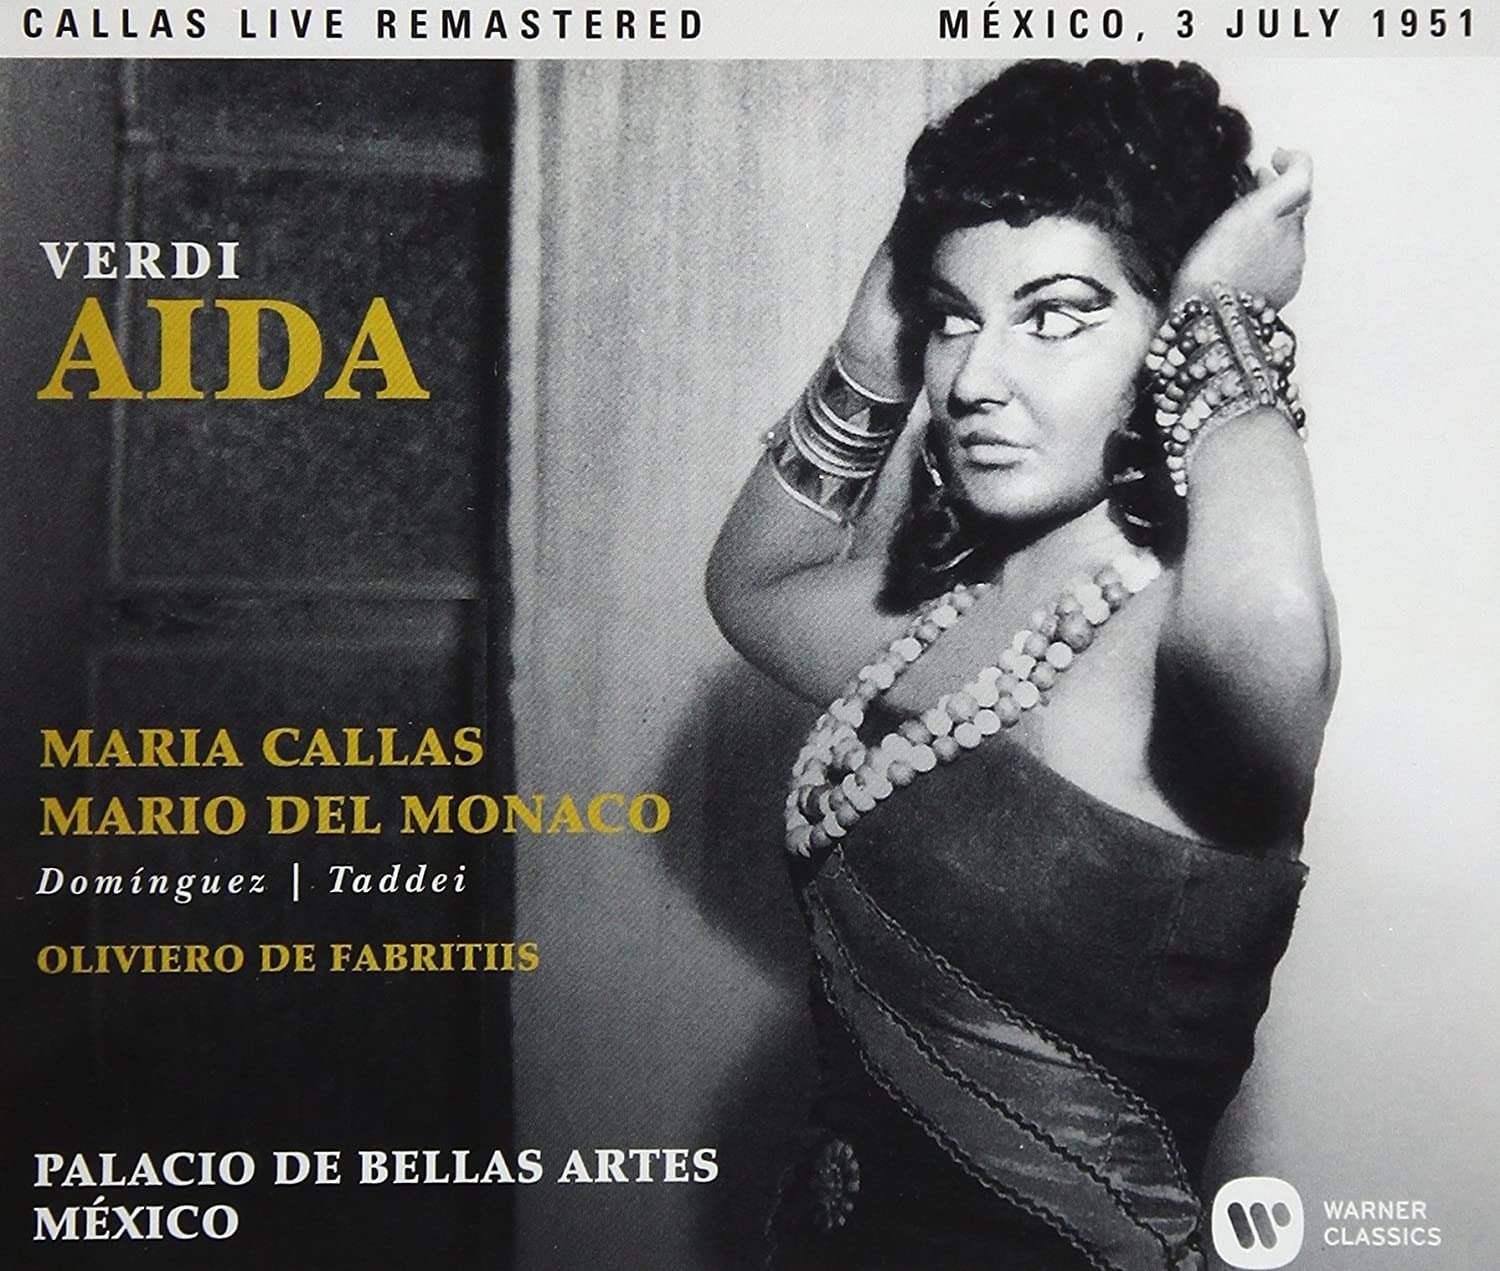 CD Shop - VERDI, GIUSEPPE Aida - 1951 Mexico Live